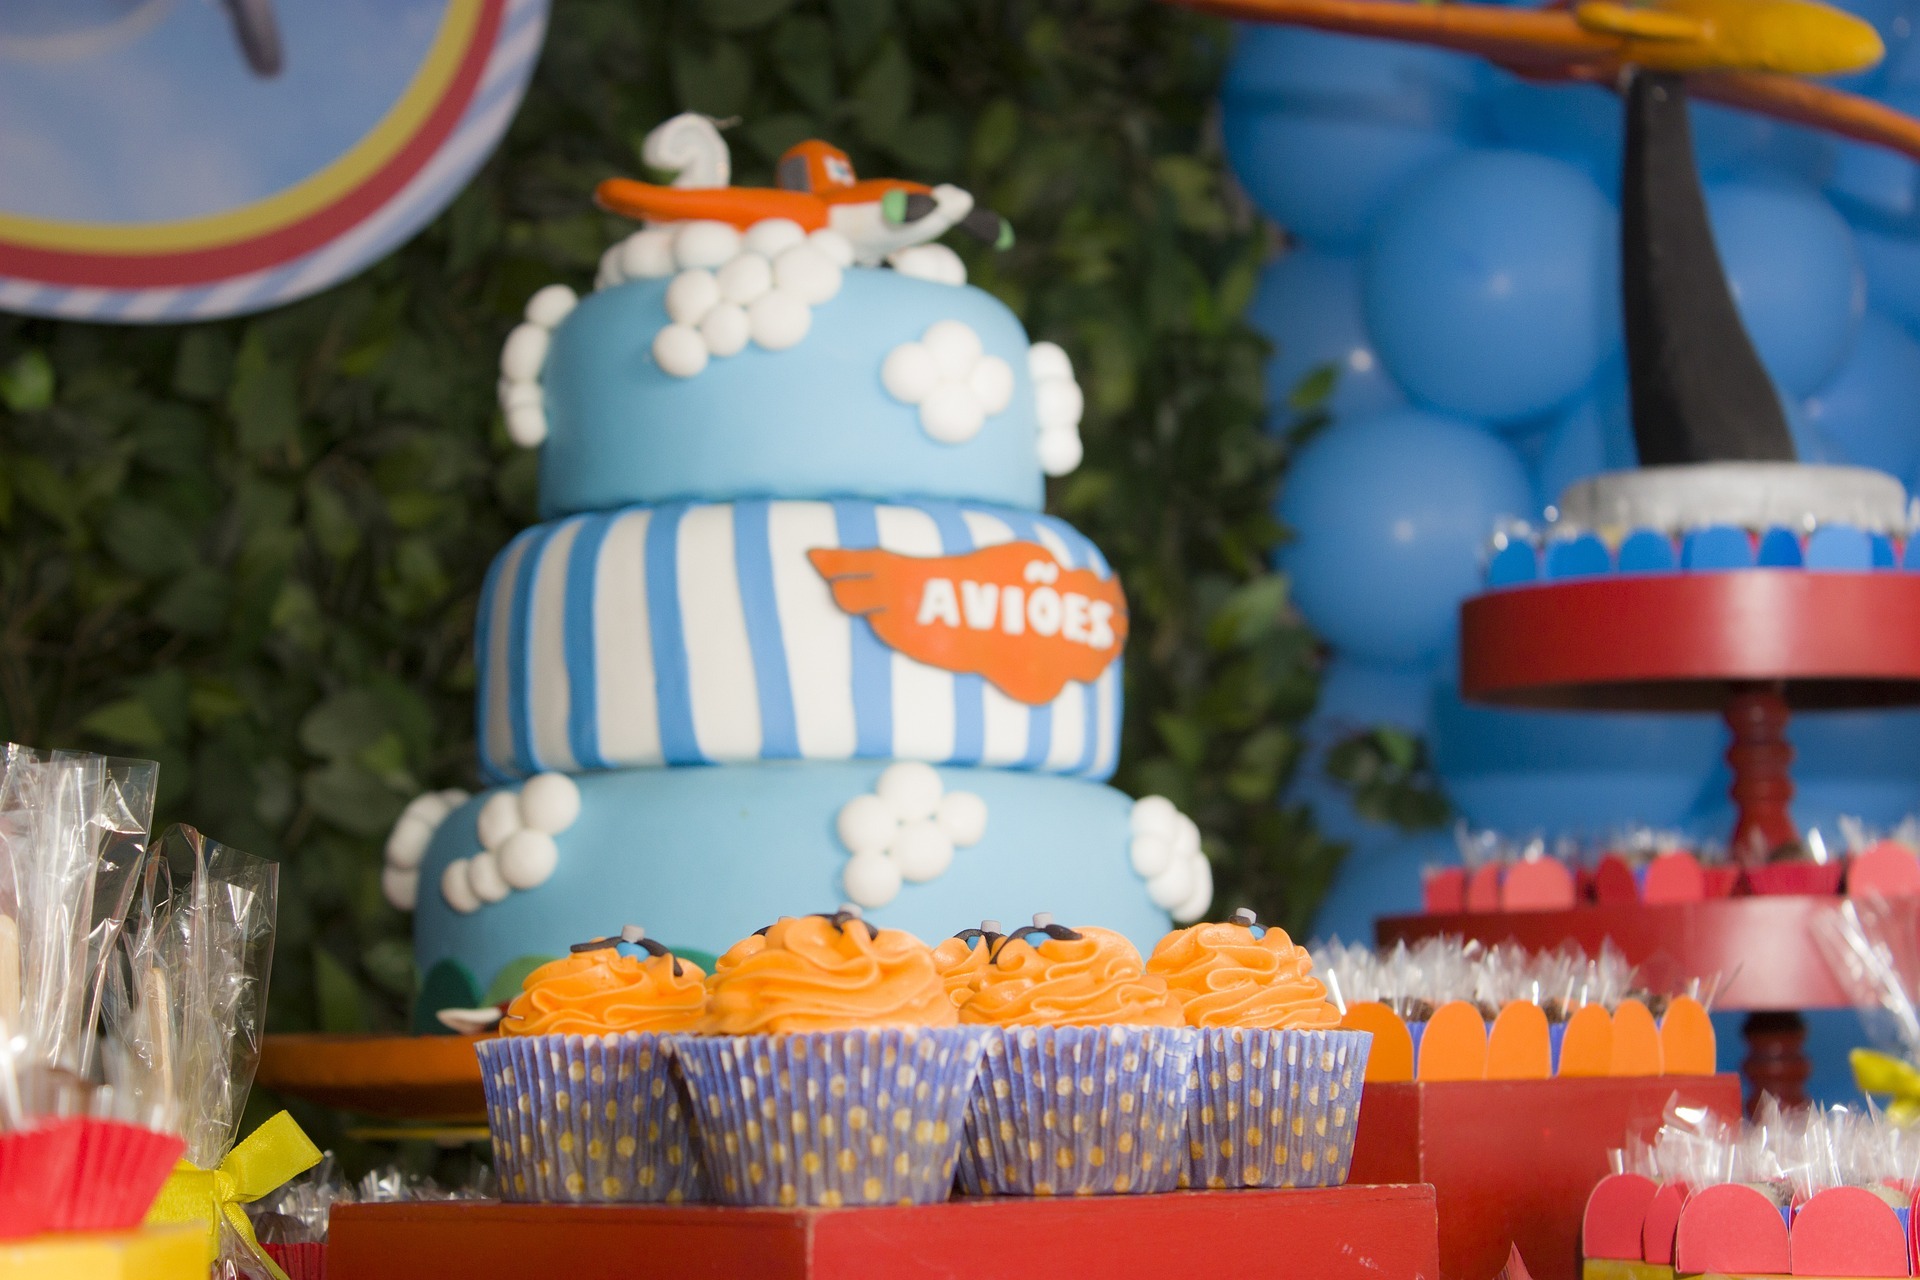 cupcakes and airplane themed birthday cake